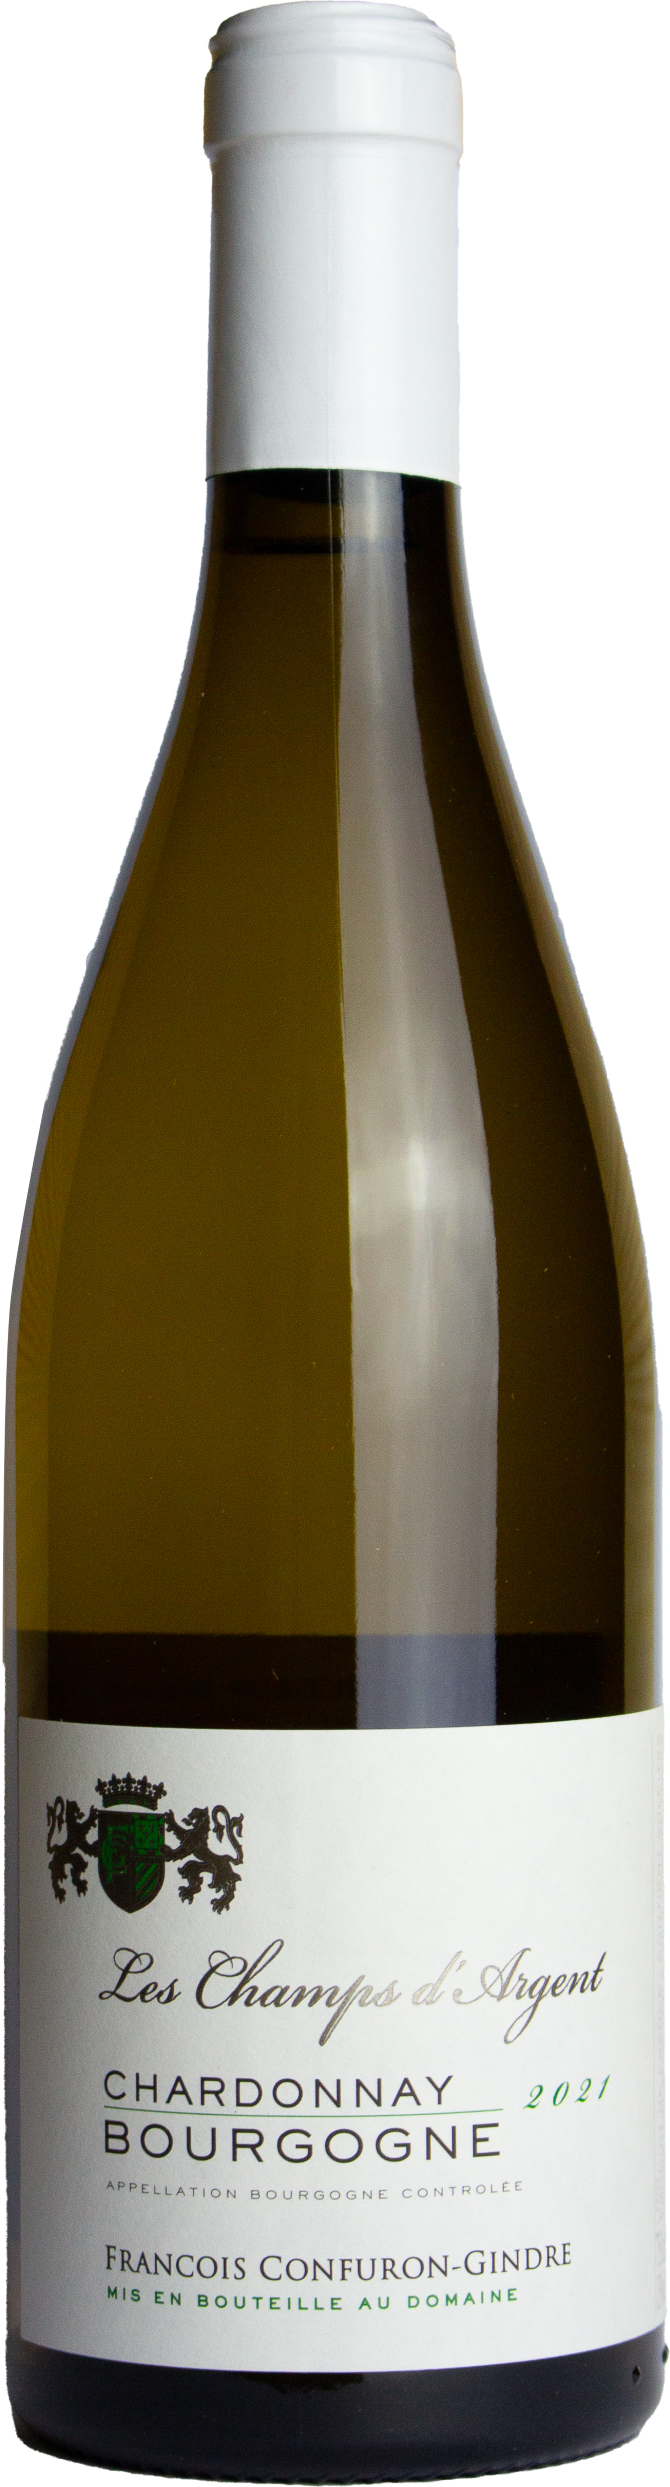 Domaine Confuron-Gindre - Bourgogne Chardonnay 2021